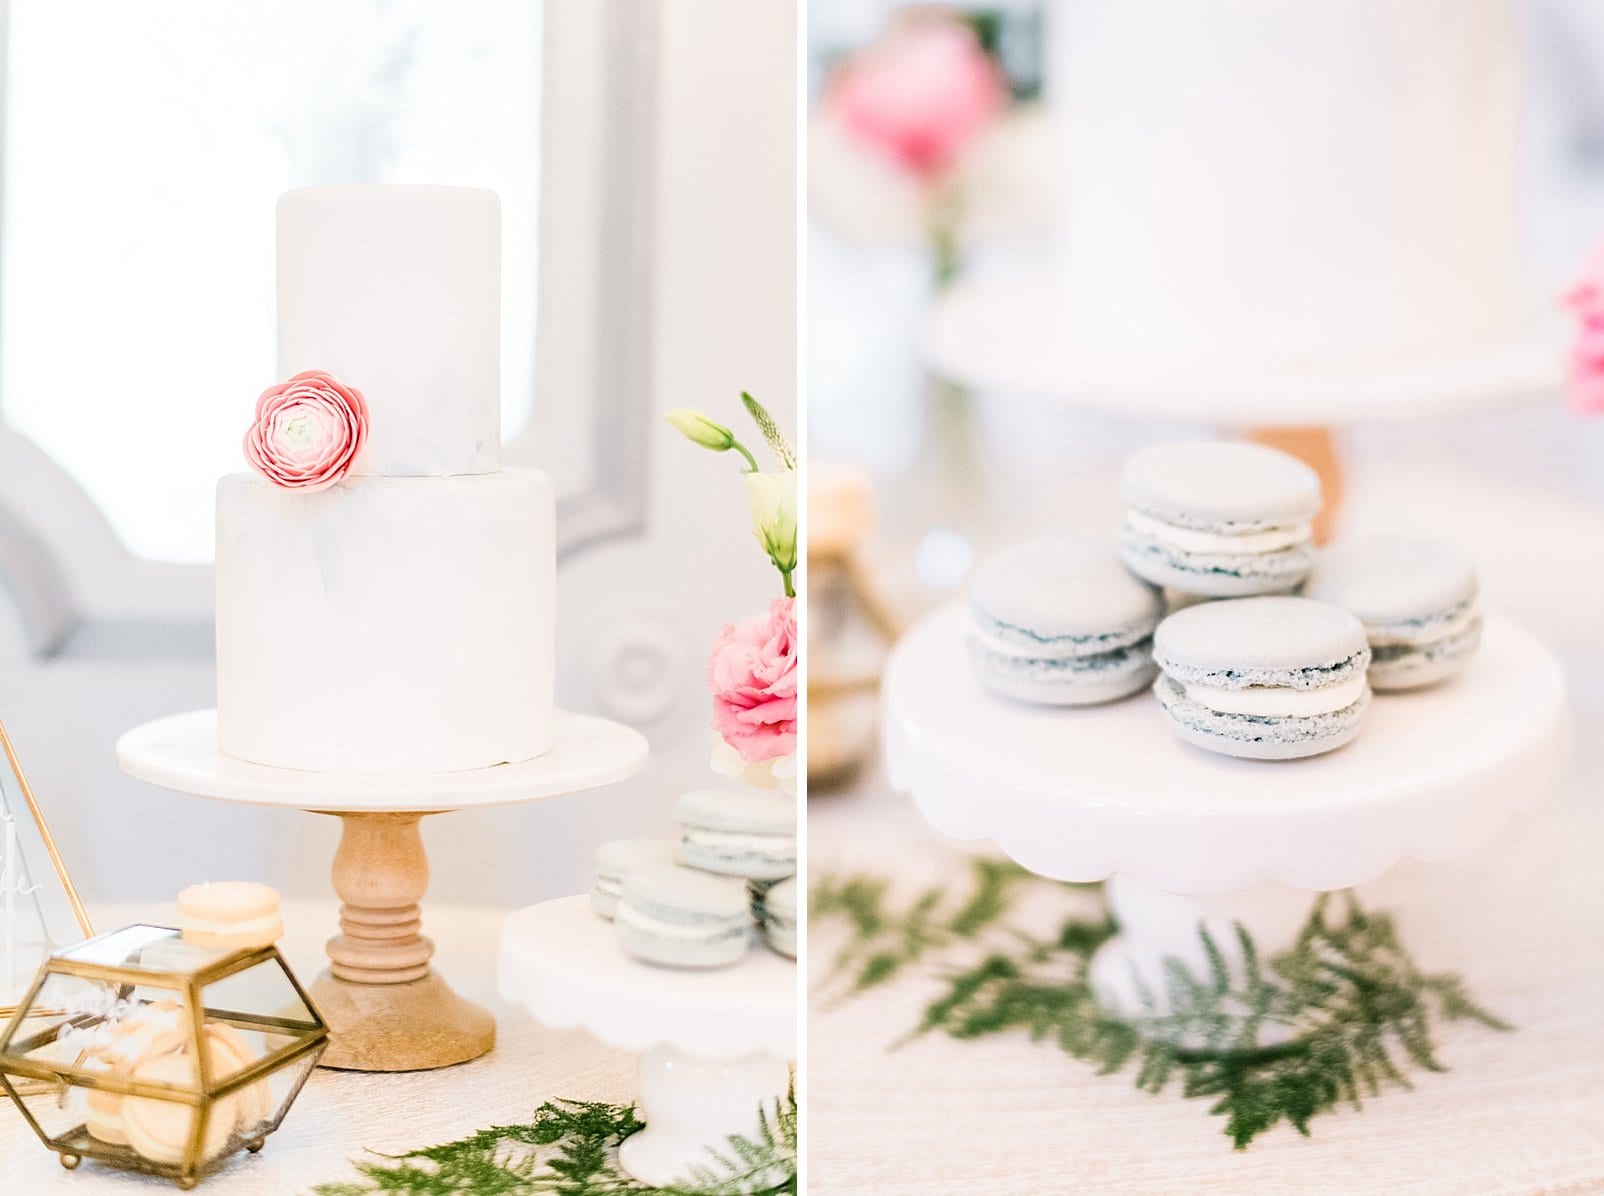 The Cupcake Shoppe cake and macaroons display photo